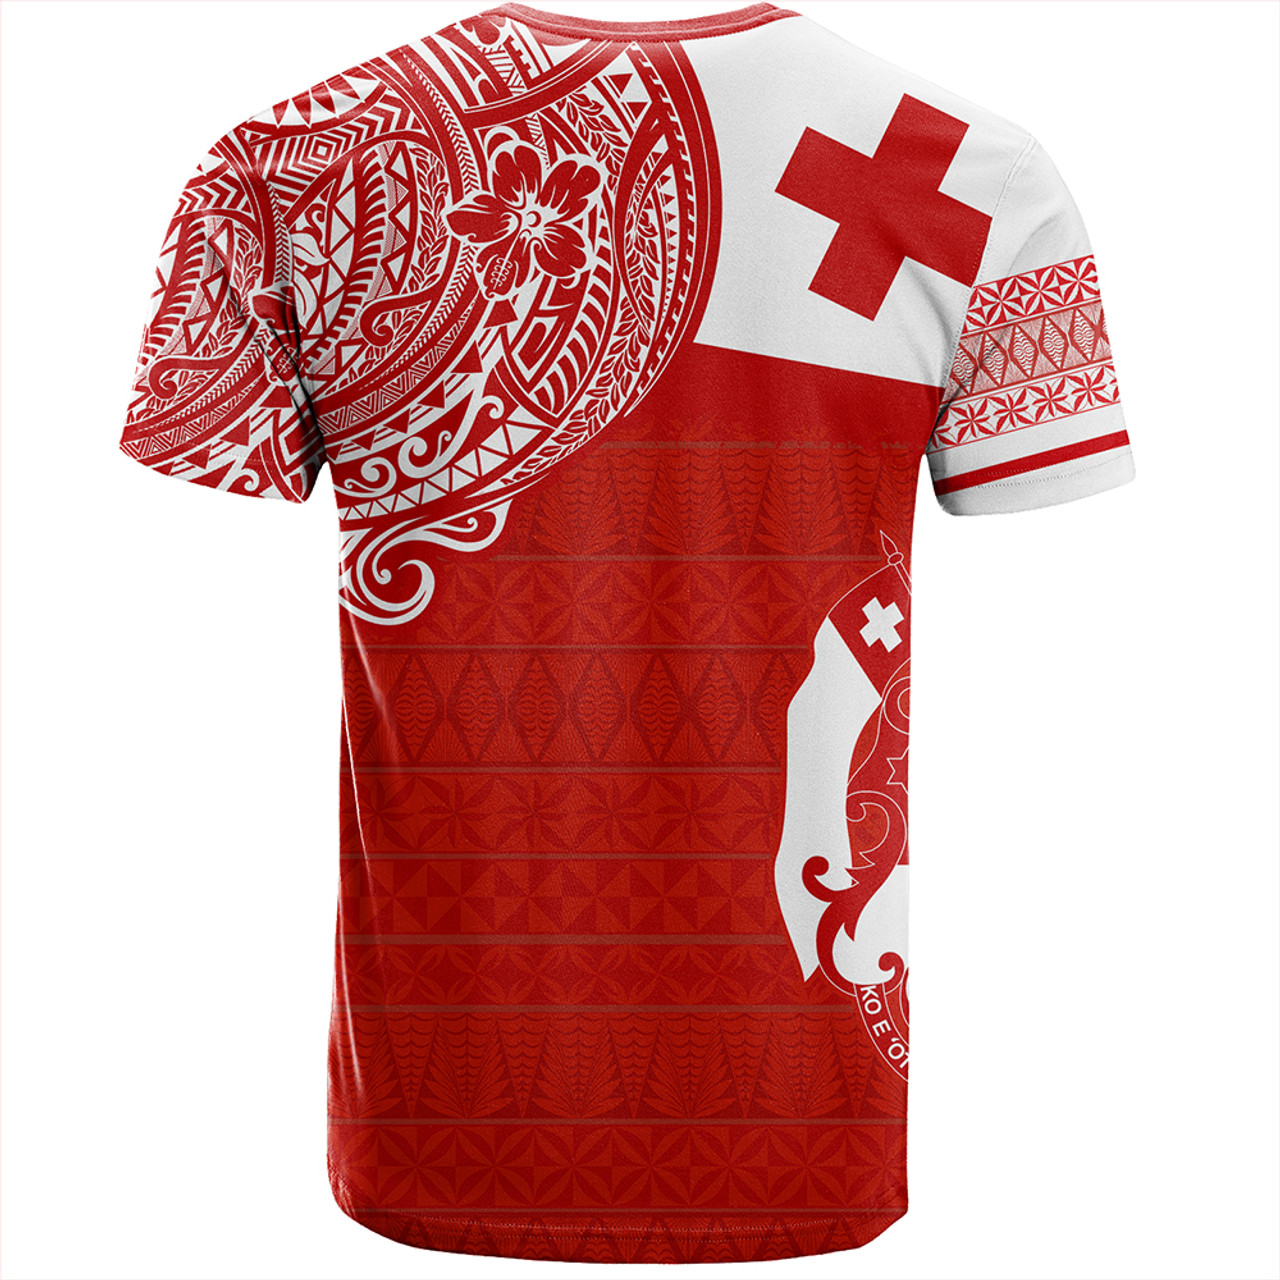 Tonga T-Shirt Tonga Polynesian Flag With Coat Of Arms